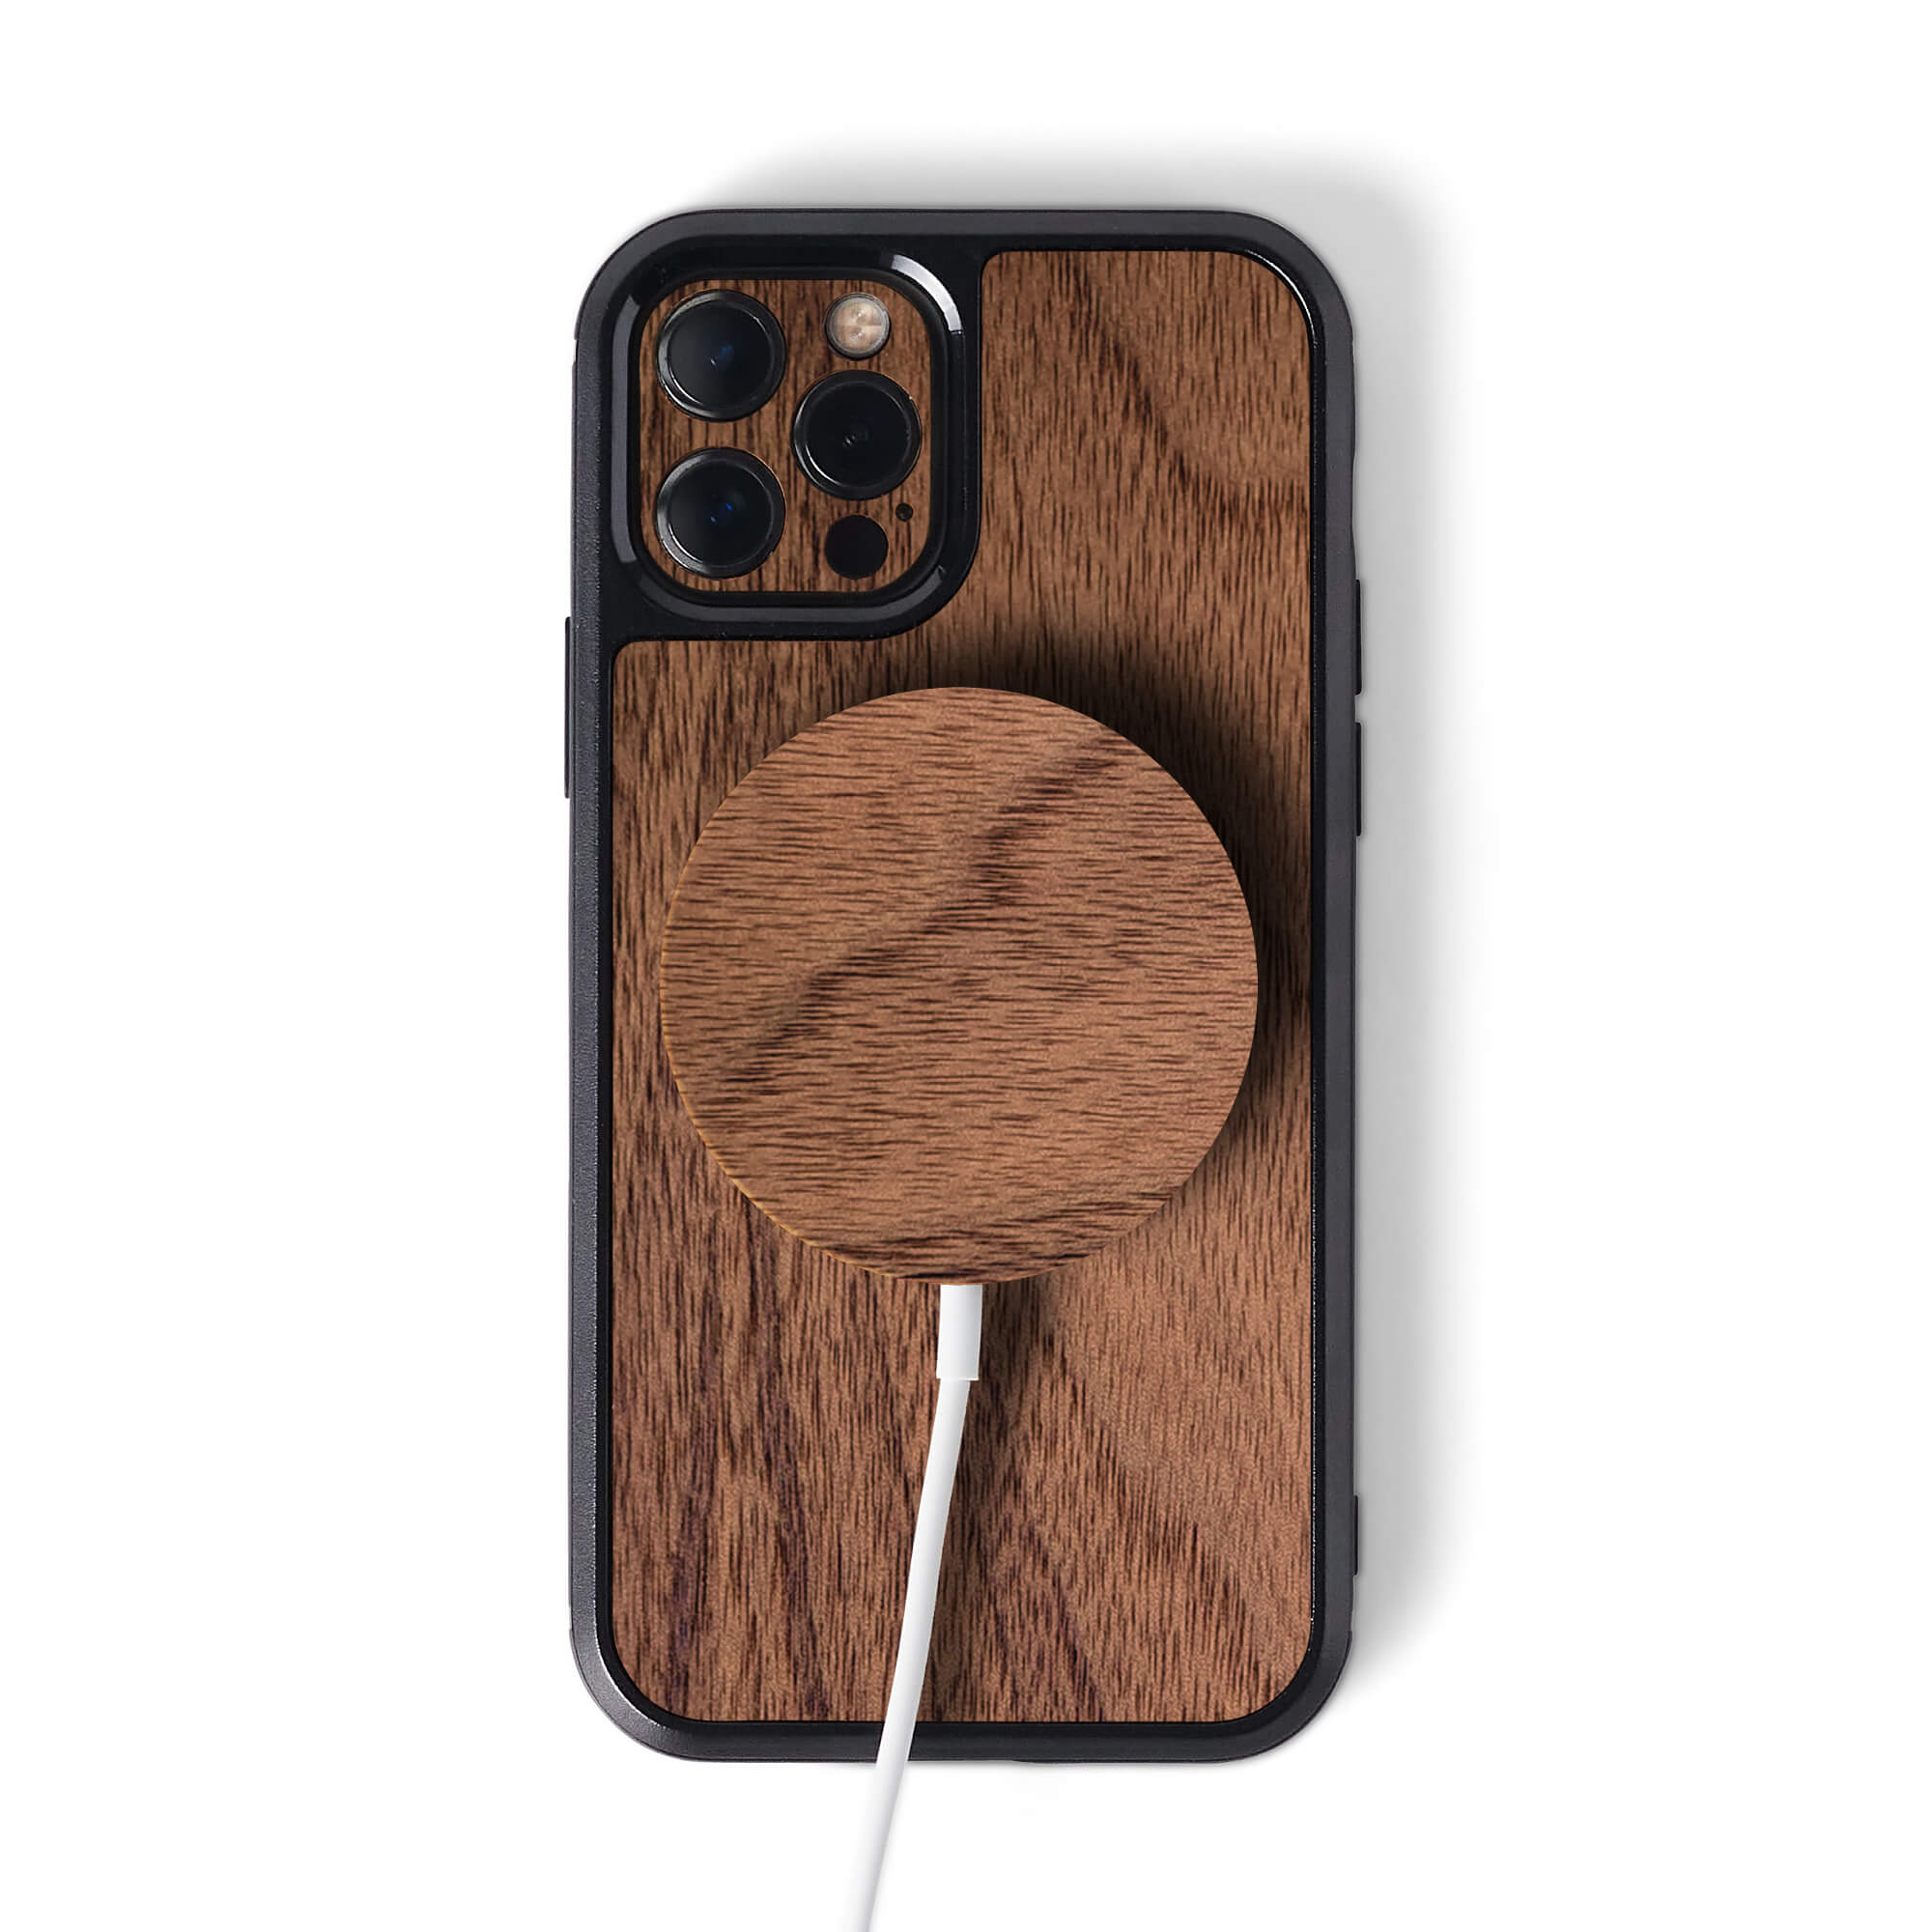 z(DEV TEST) - iPhone wood